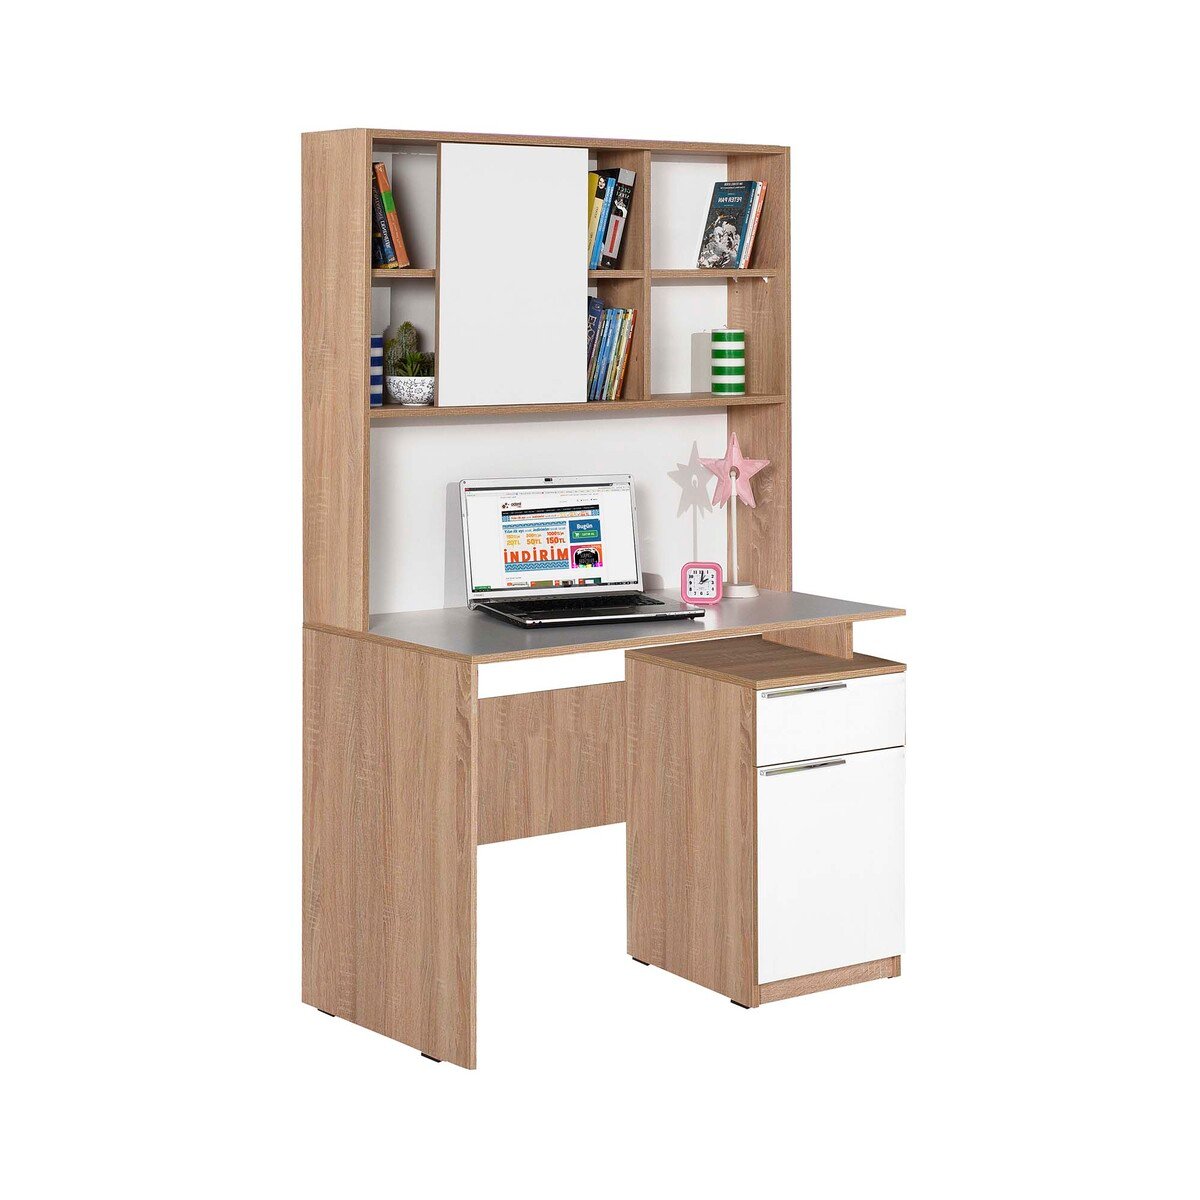 Maple Leaf Wooden Study Table With Bookshelf CMS-722-SD01 W105xH170xD56cm Sonoma&White